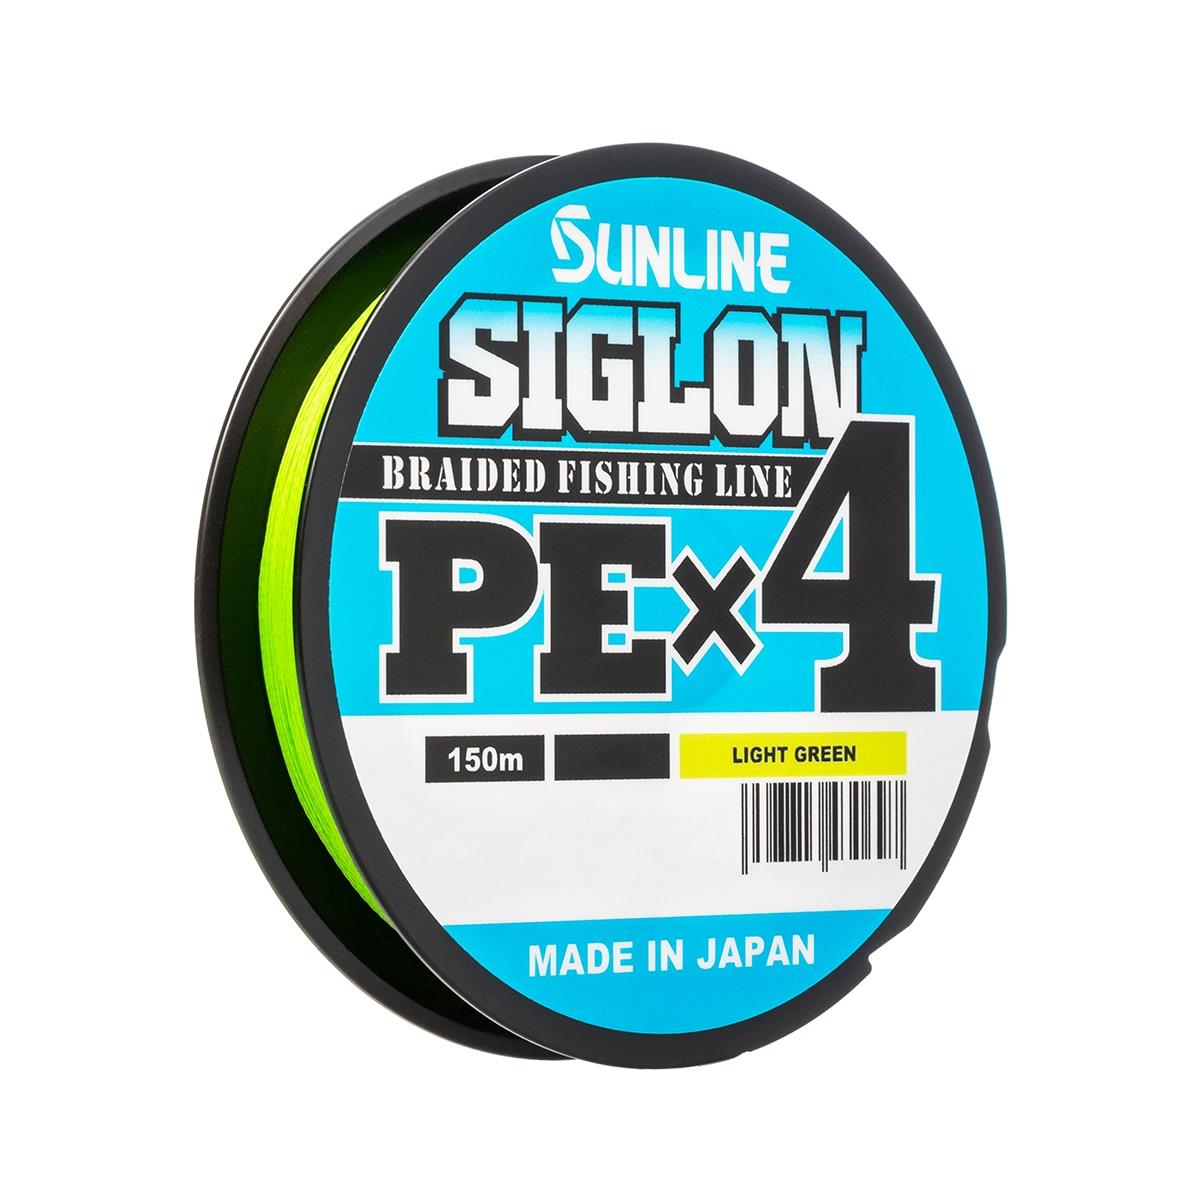 Шнур SIGLON PE×4 150 м (Light green) Sunline шнур для вязания